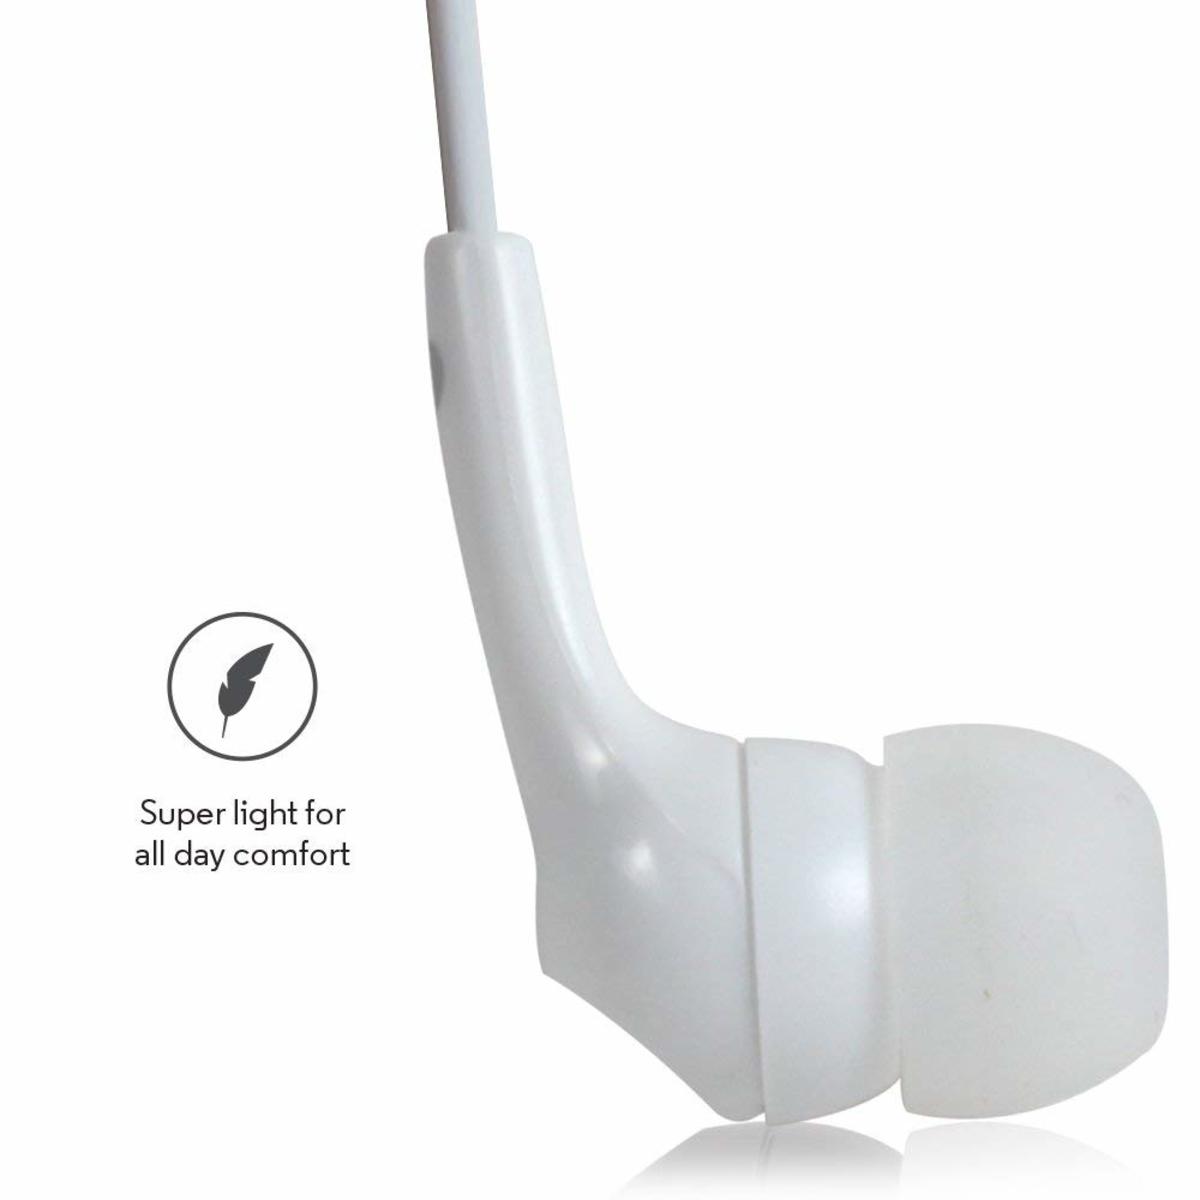 Motorola Stereo Headset EarBuds2 White